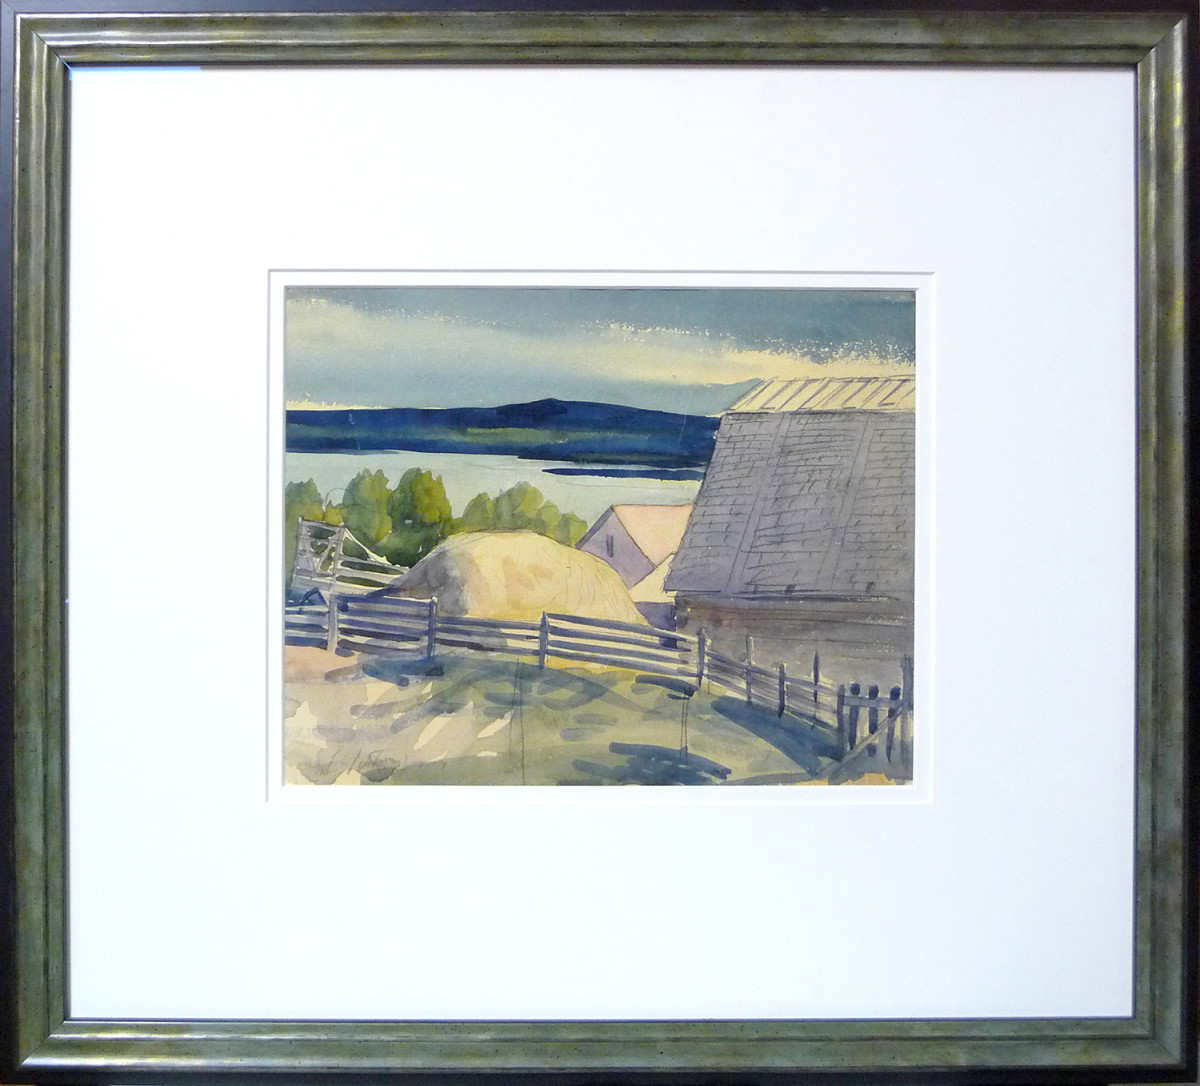 2378 - Wagon and barn, Wabamun Lake by Llewellyn Petley-Jones (1908-1986) 